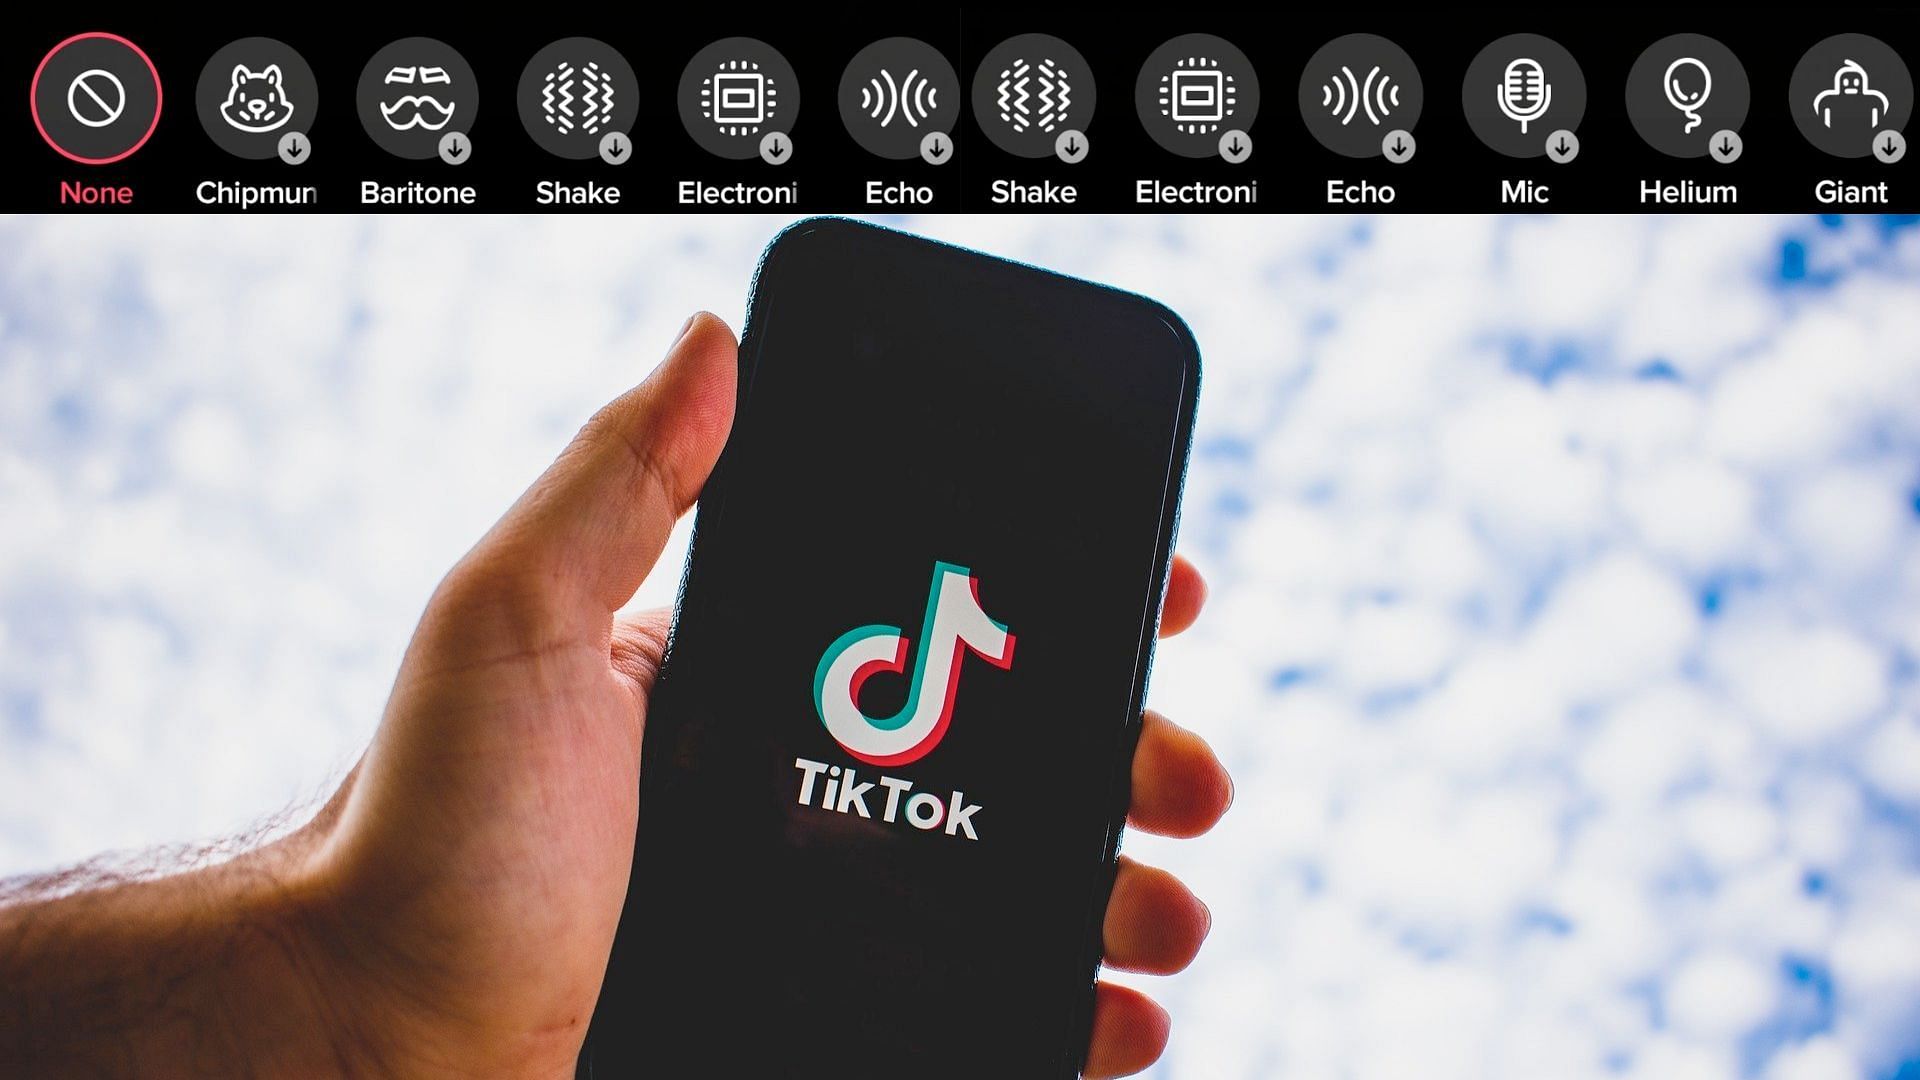 Tiktok update brings a new voice changing feature (image via PixaBay/Konkarampelas)